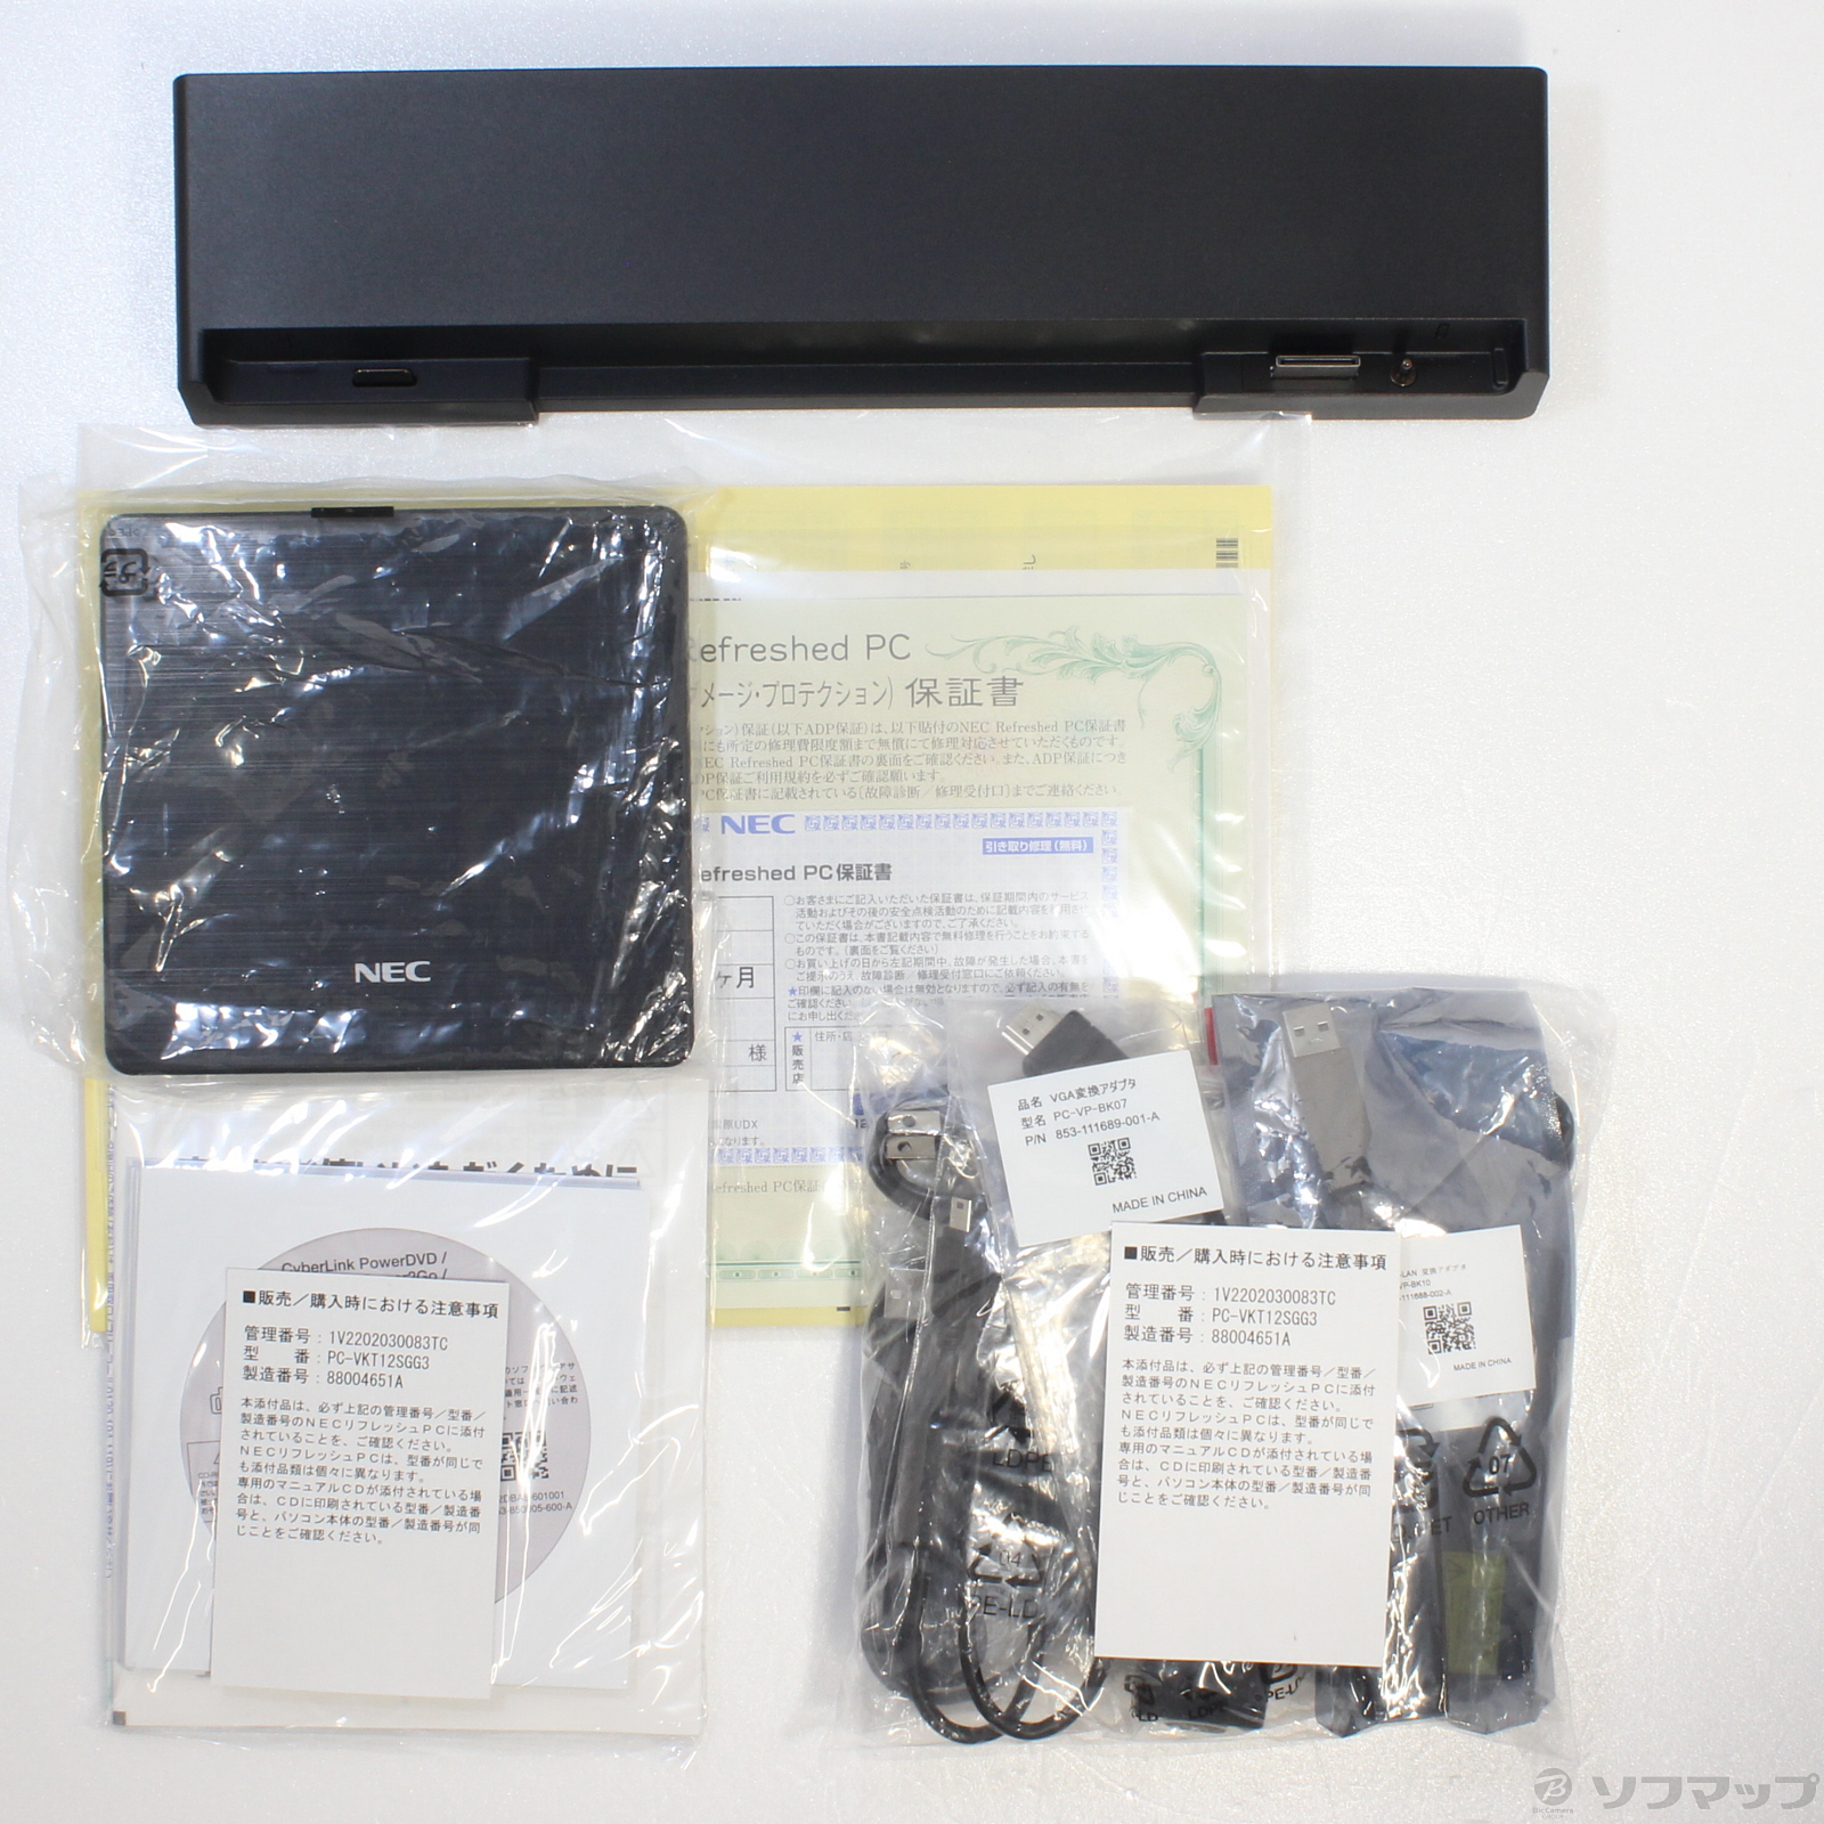 VersaPro タイプVS PC-VKT12SGG3 〔NEC Refreshed PC〕 〔Windows 10〕 ≪メーカー保証あり≫